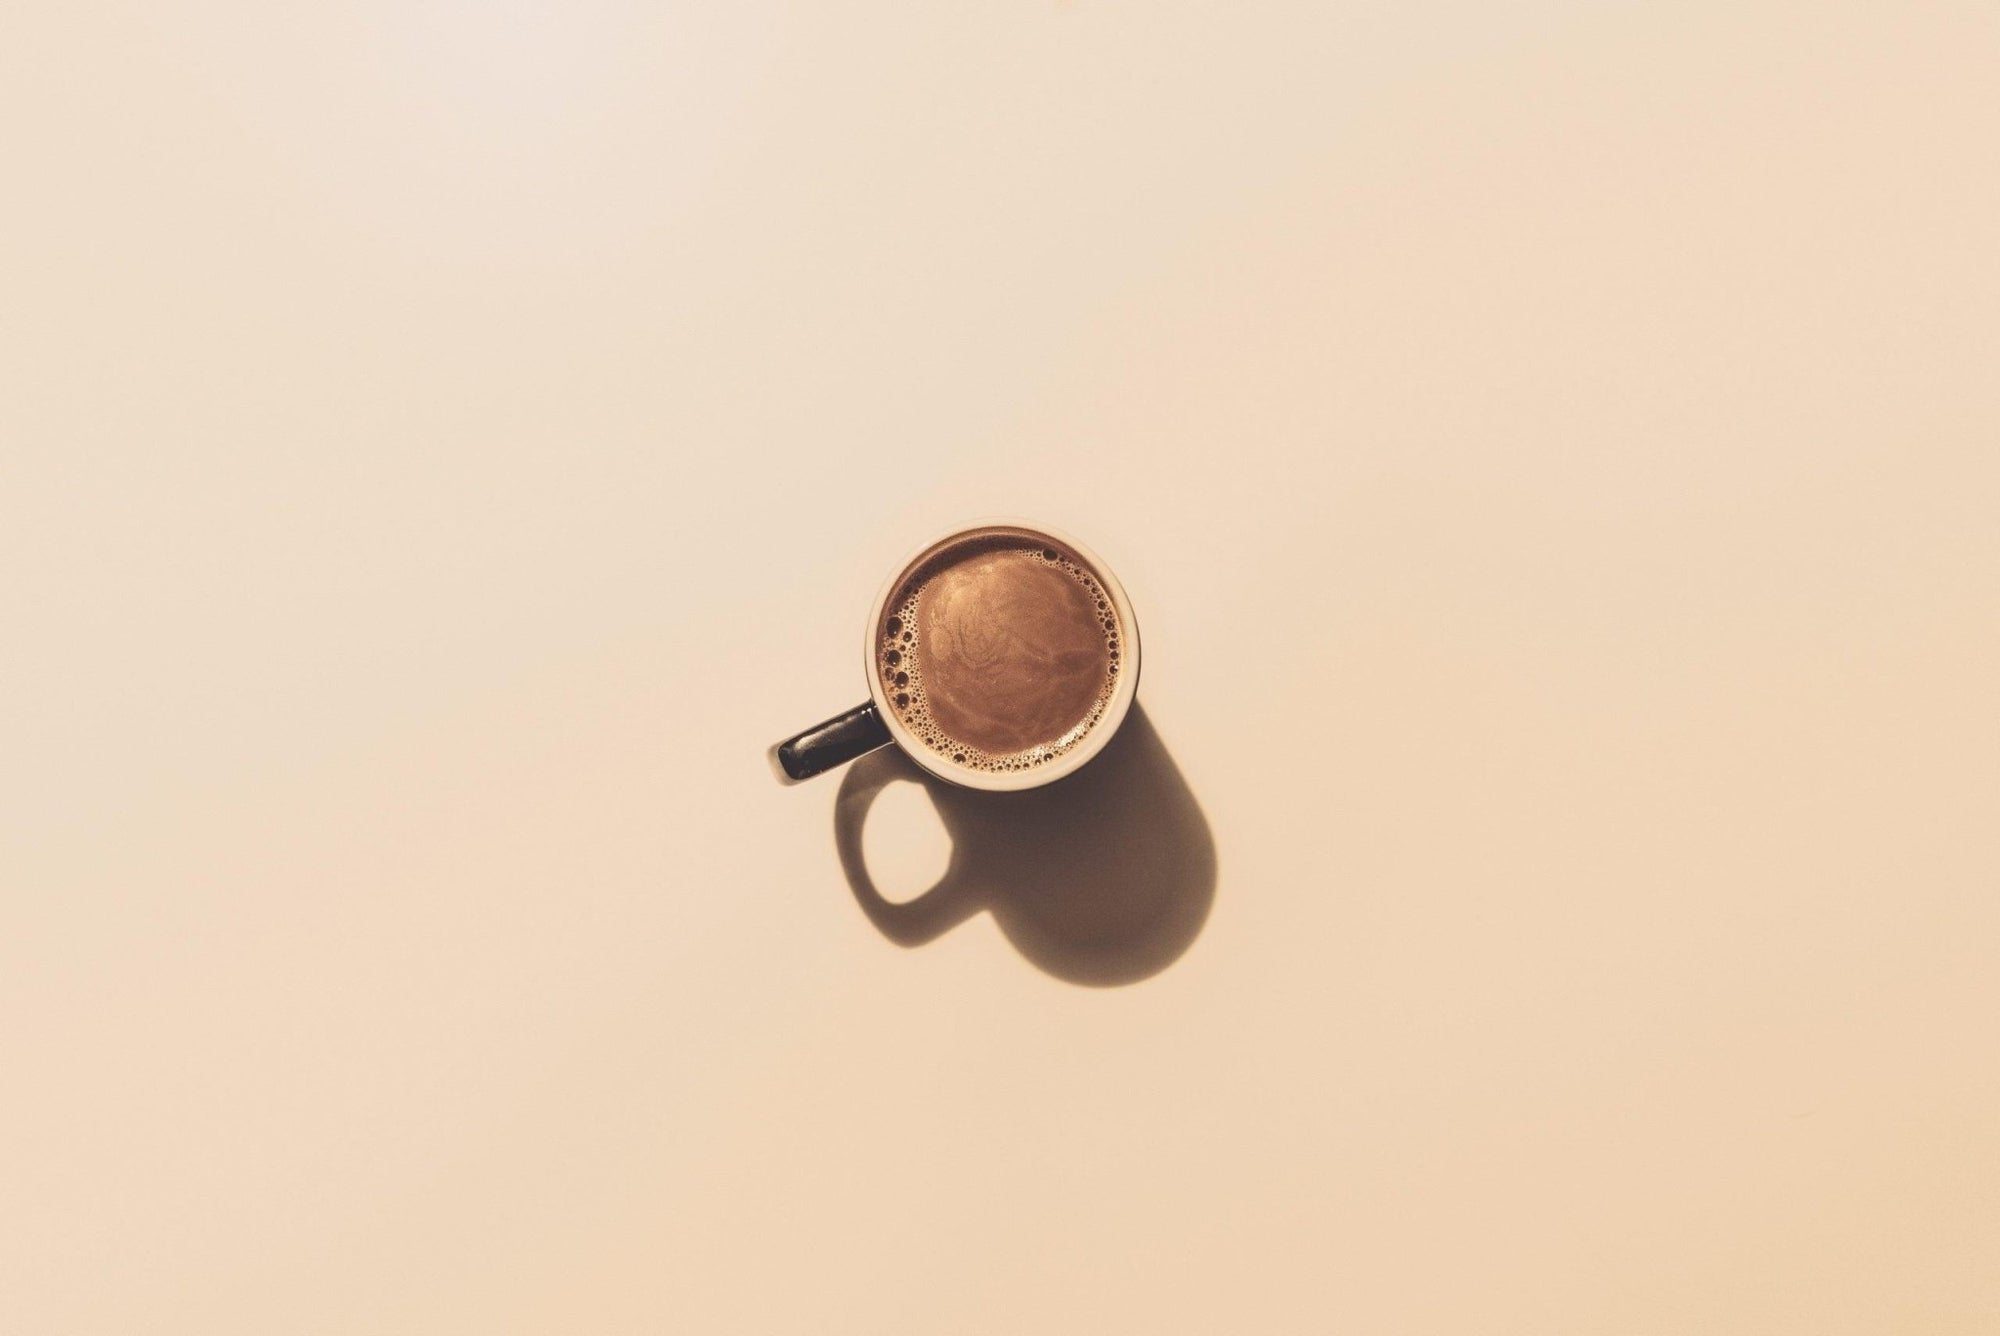 CBD Kaffee selber herstellen: So geht's! - Nature Labs